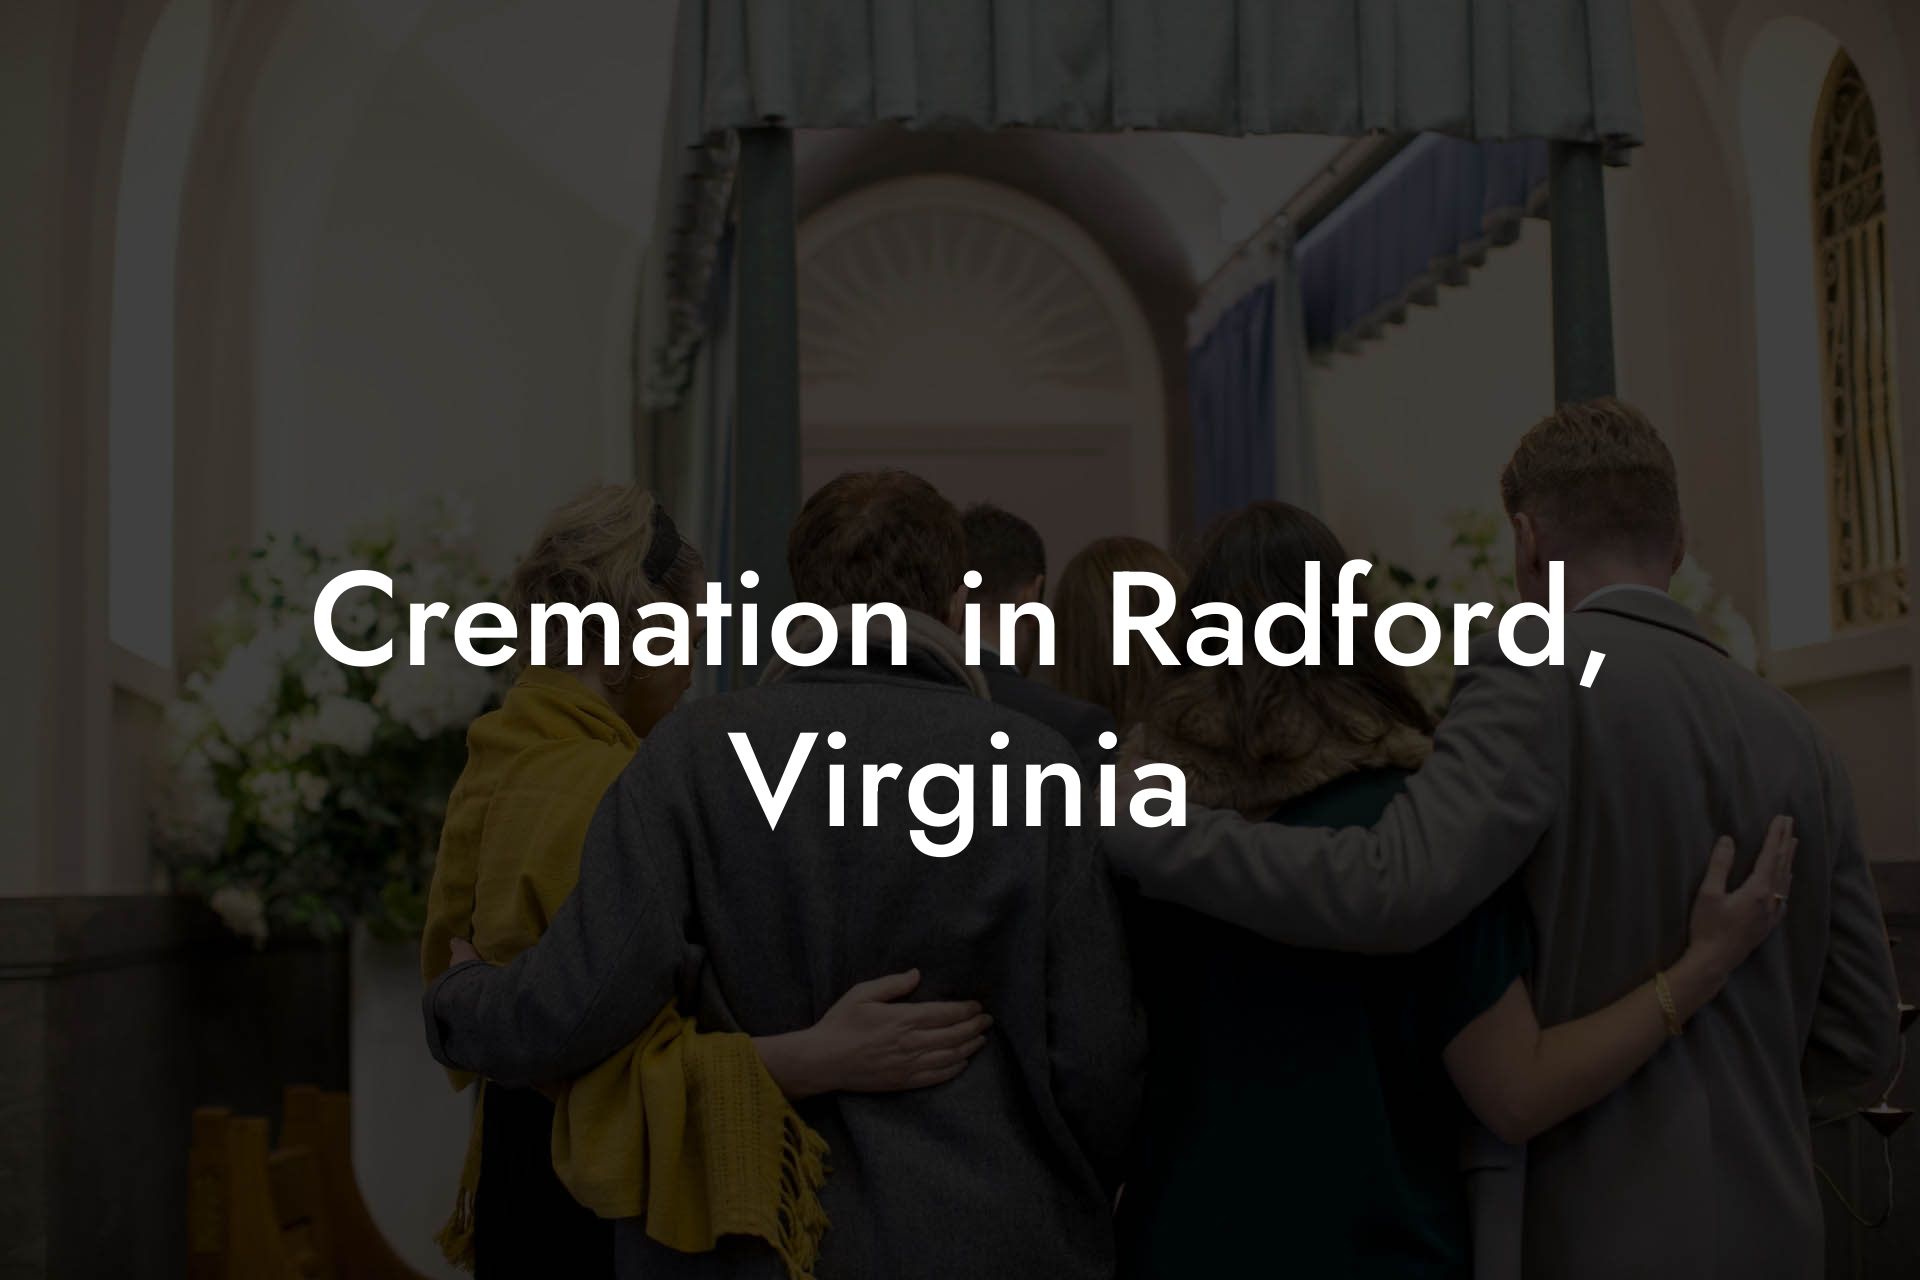 Cremation in Radford, Virginia